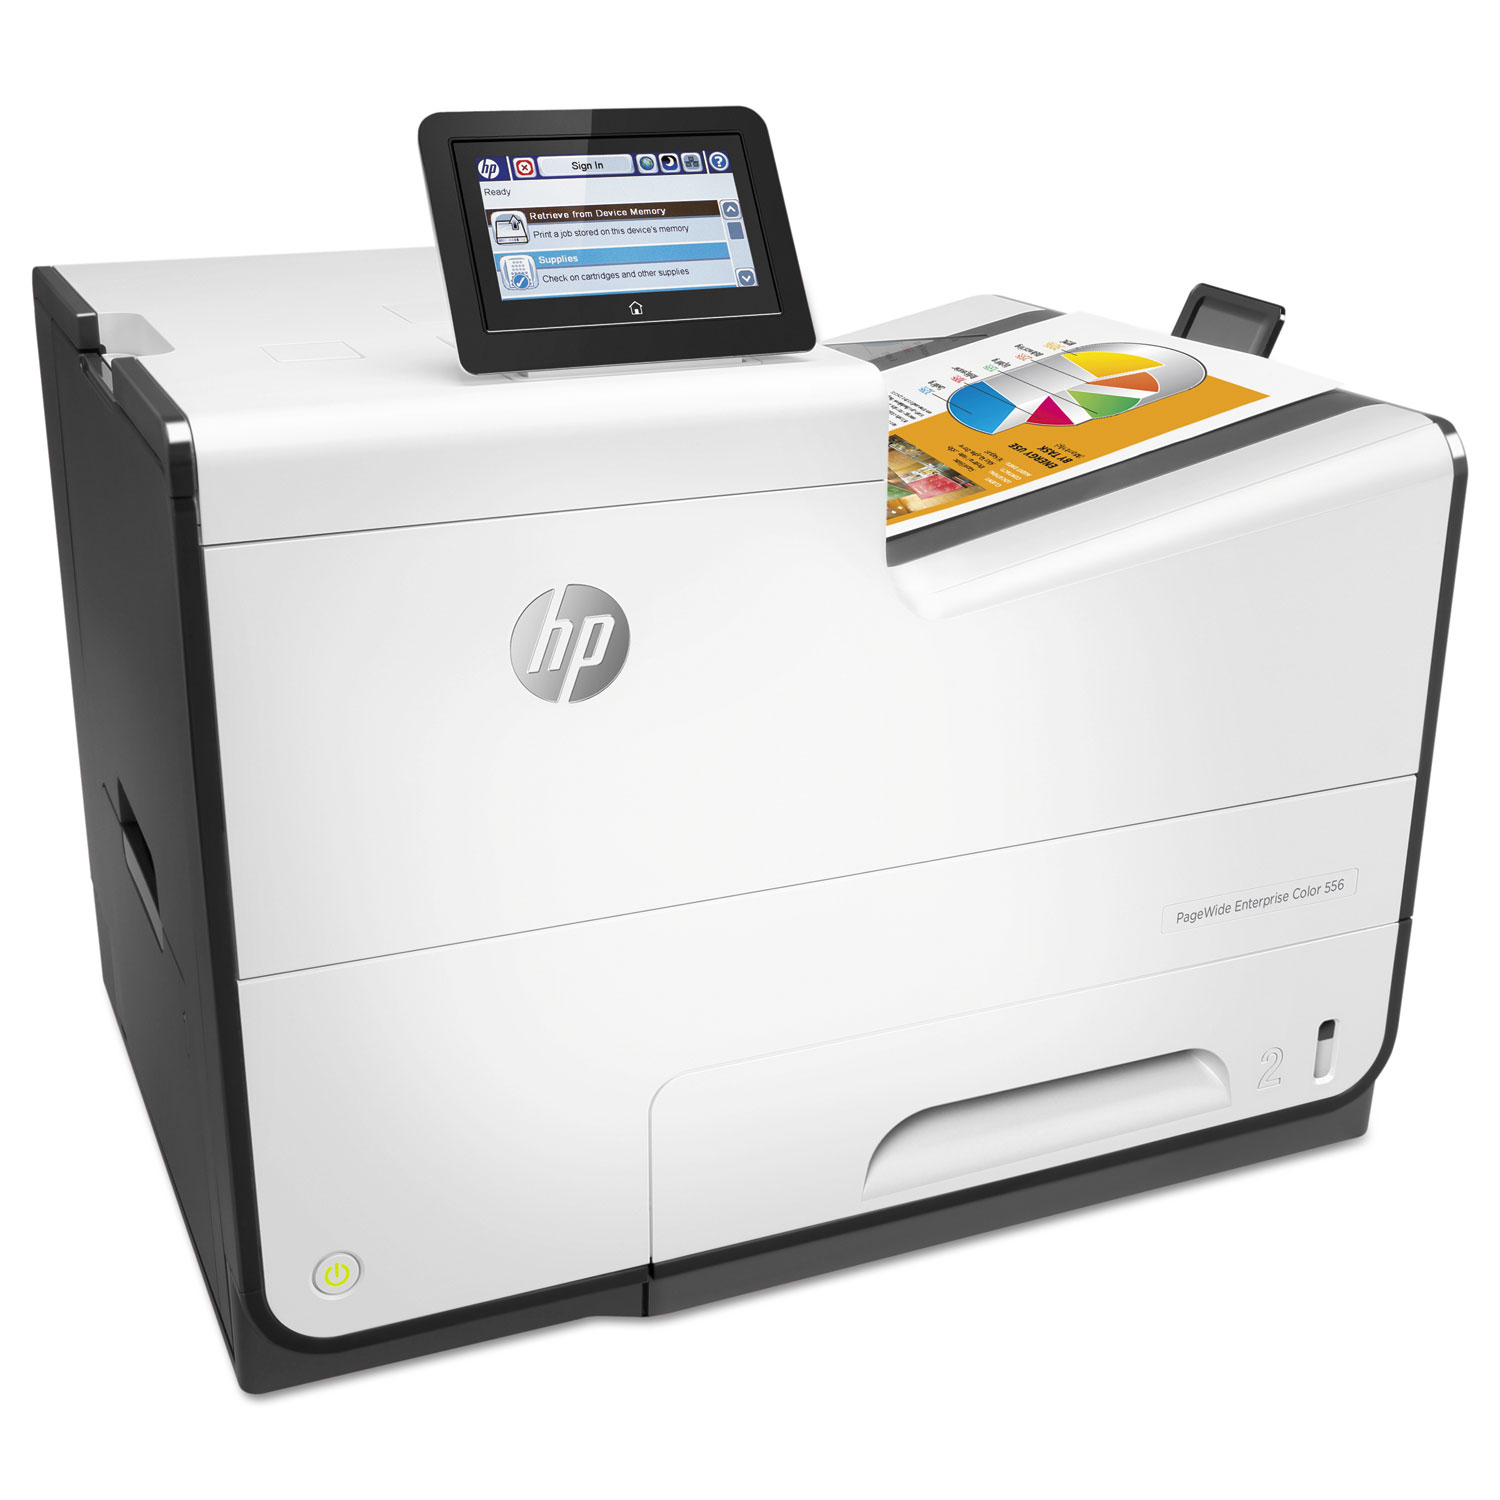  HP G1W46A#BGJ PageWide Enterprise Color 556dn Wireless Printer (HEWG1W46A) 